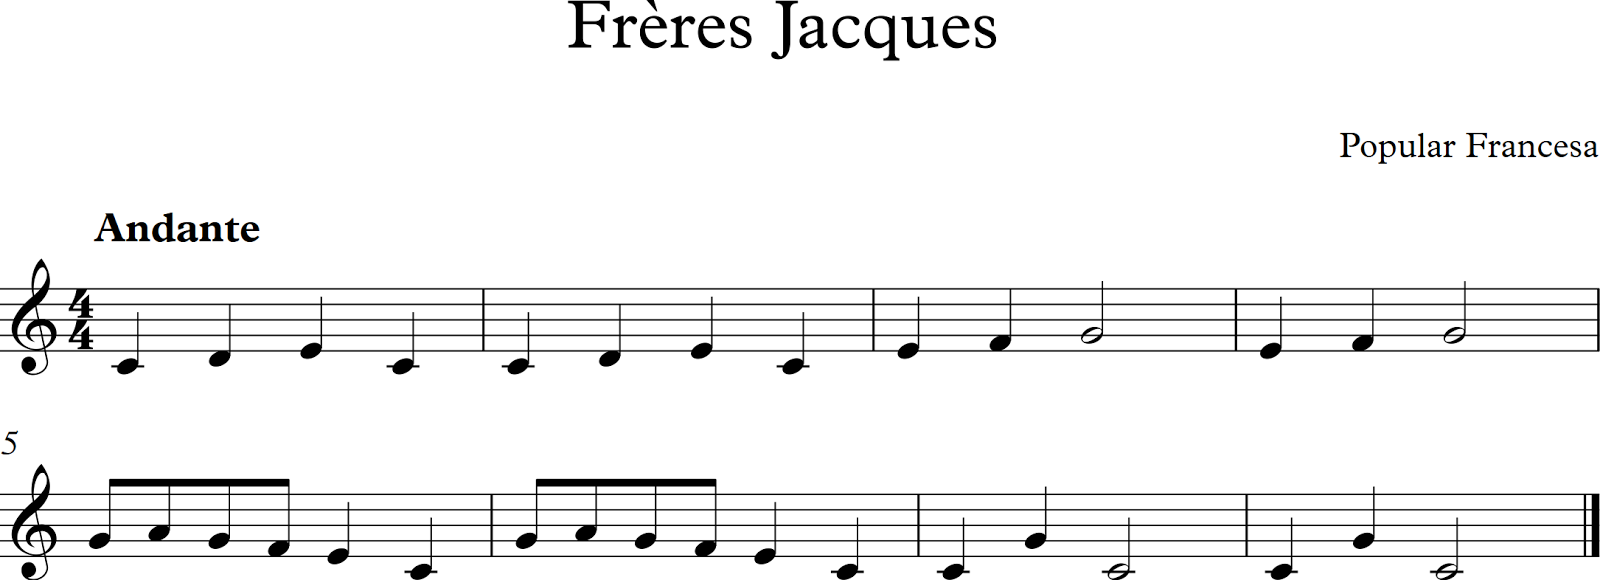 Frere Jacques